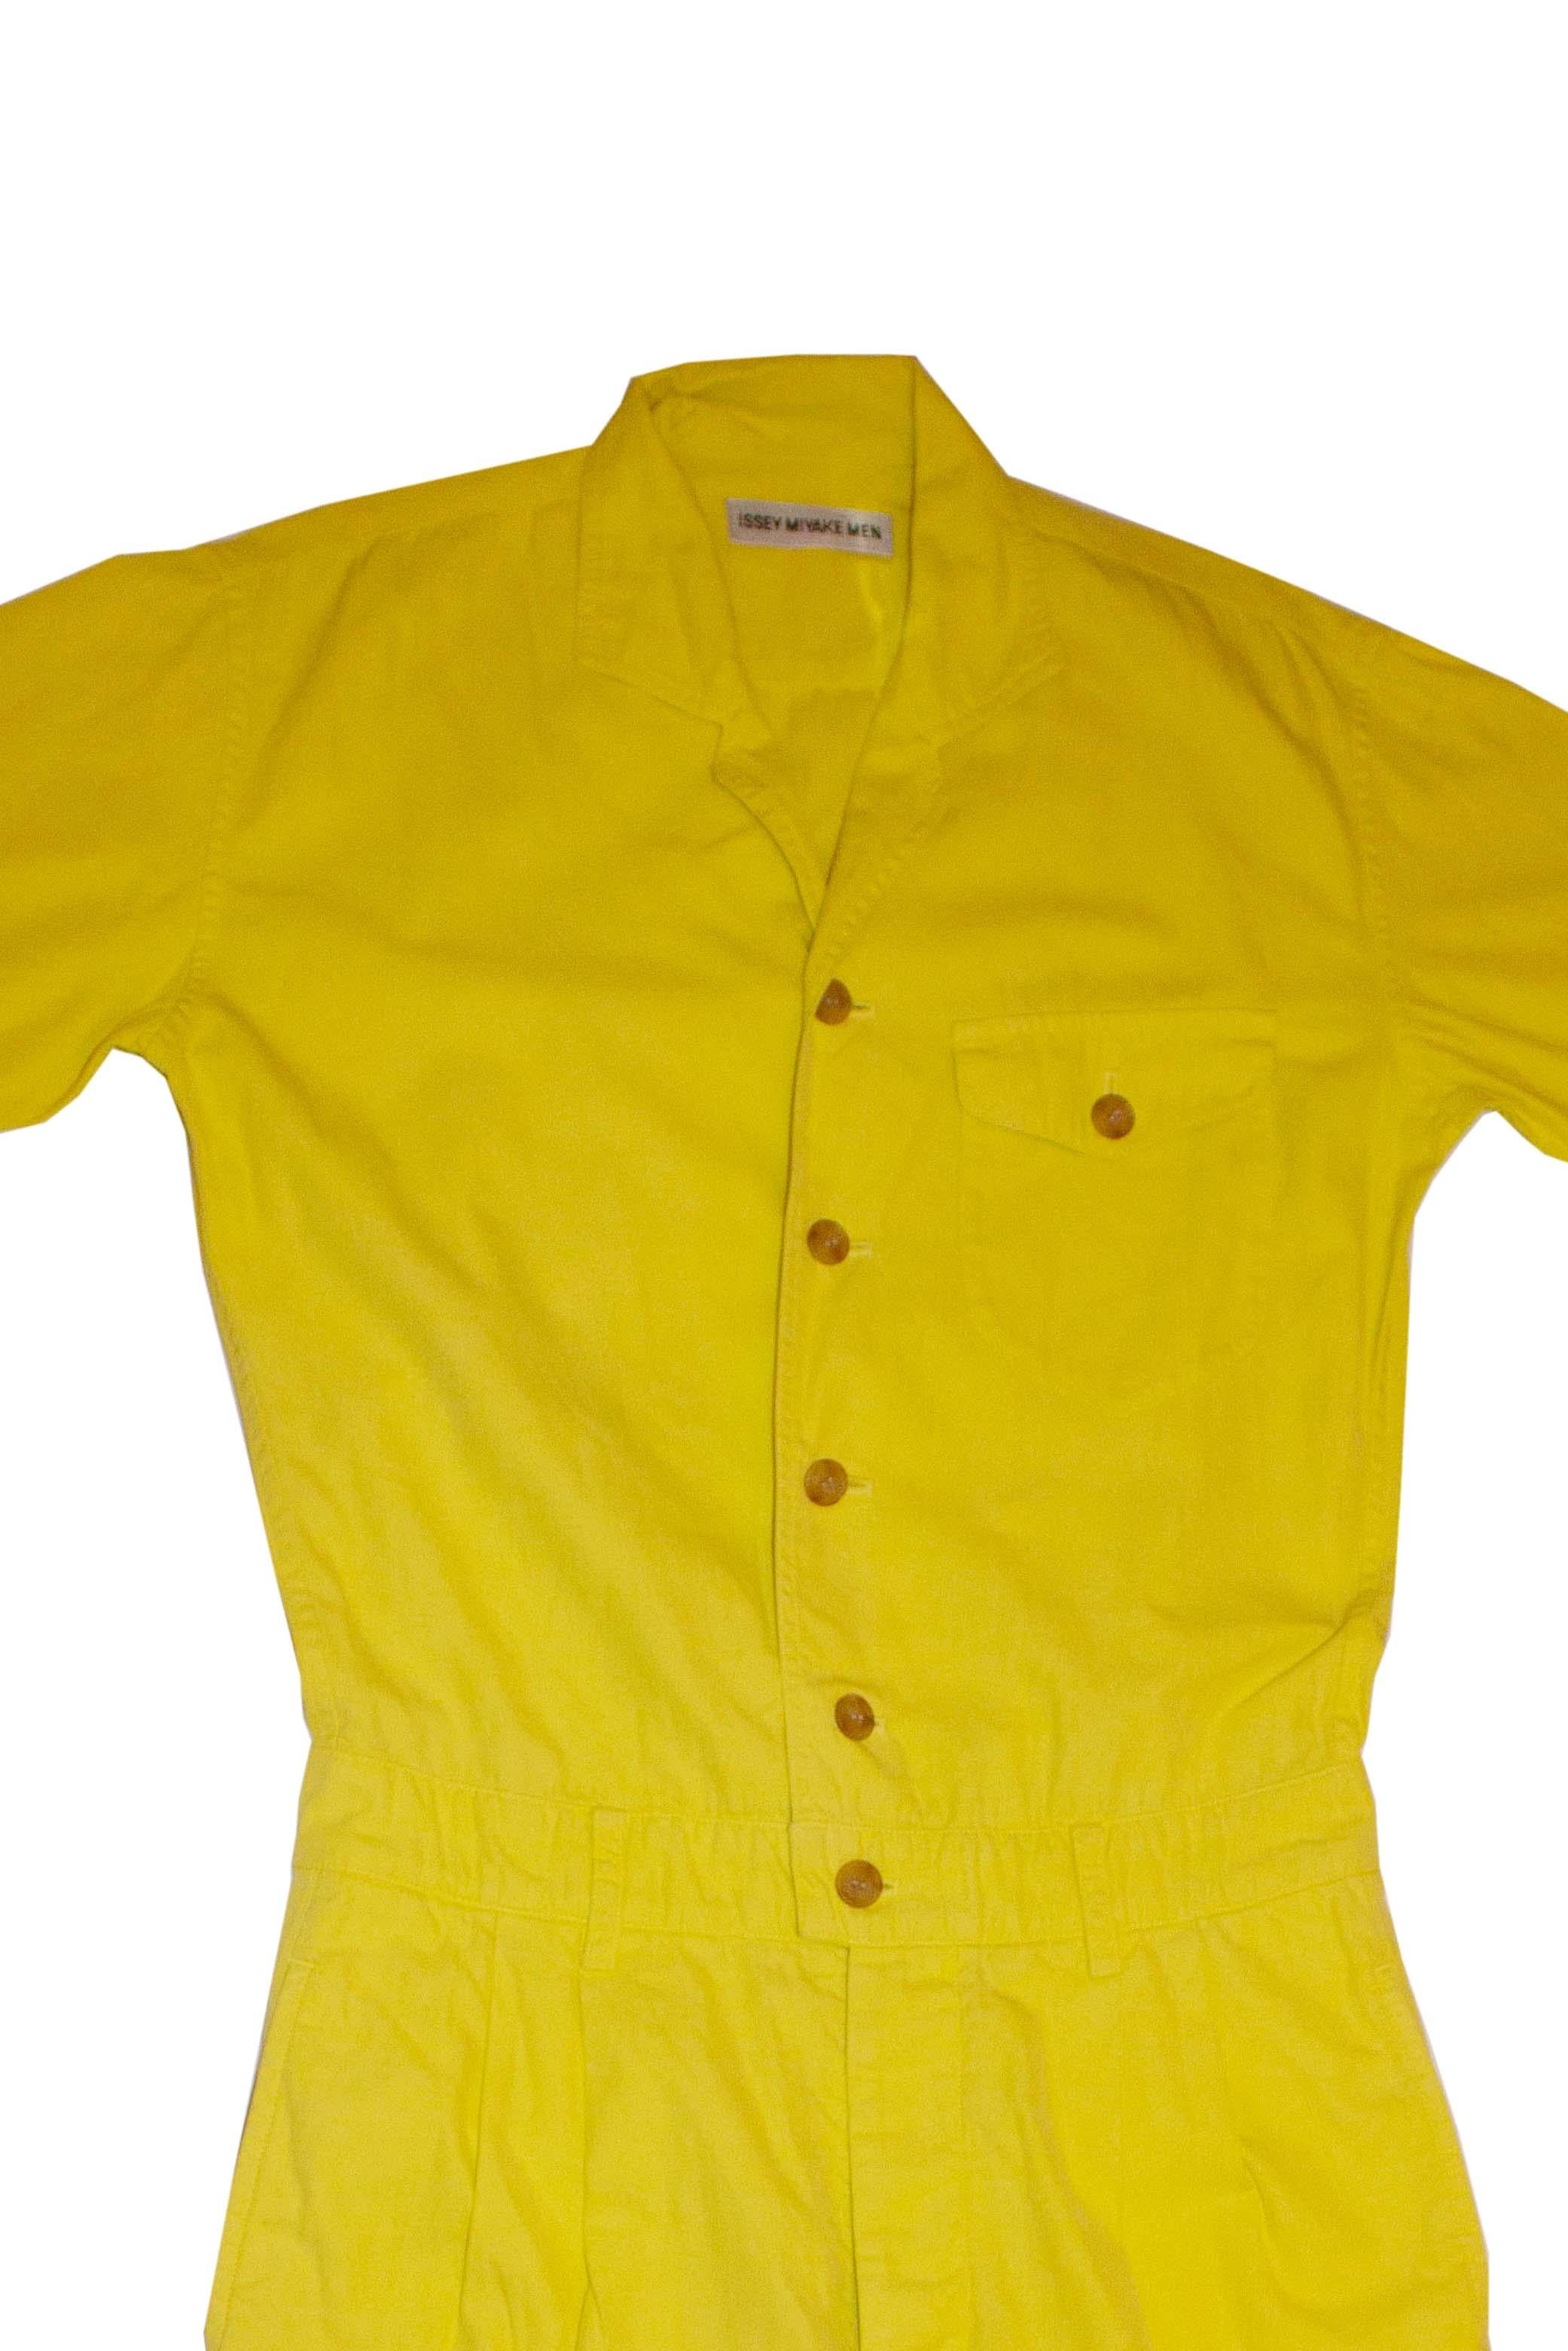 mens yellow jumpsuit